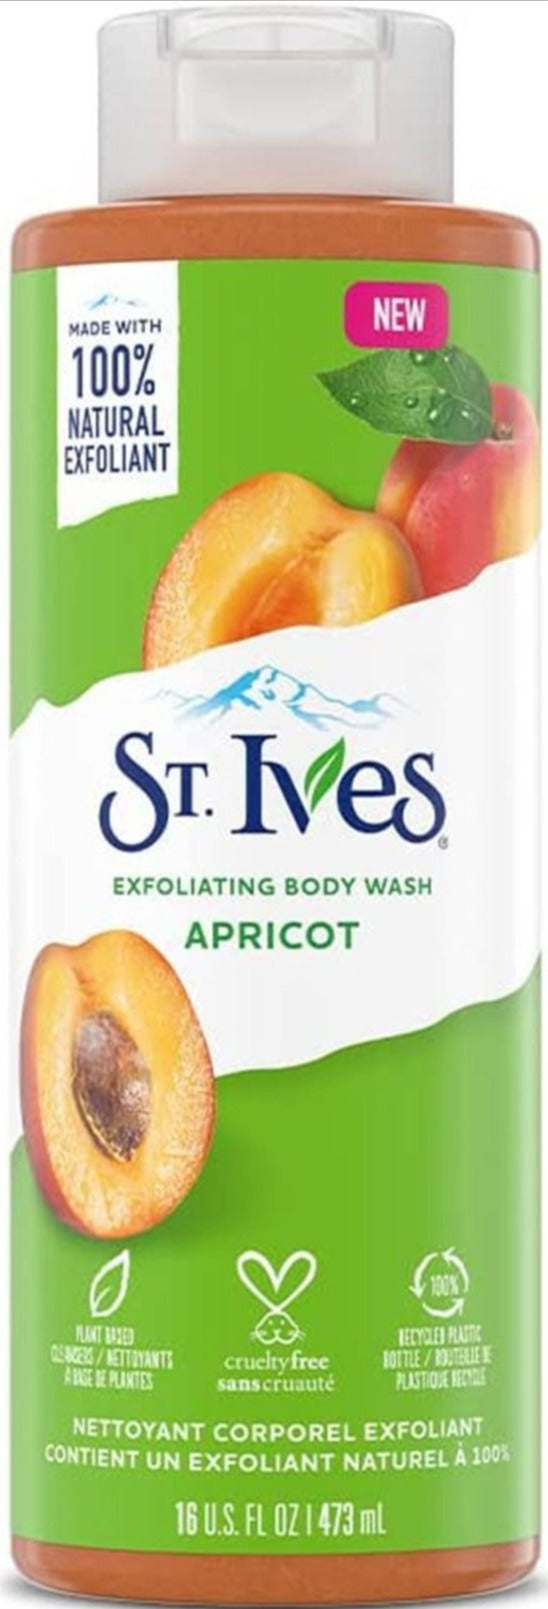 St. Ives Exfoliating Apricot Body Wash/Shower gel 16oz